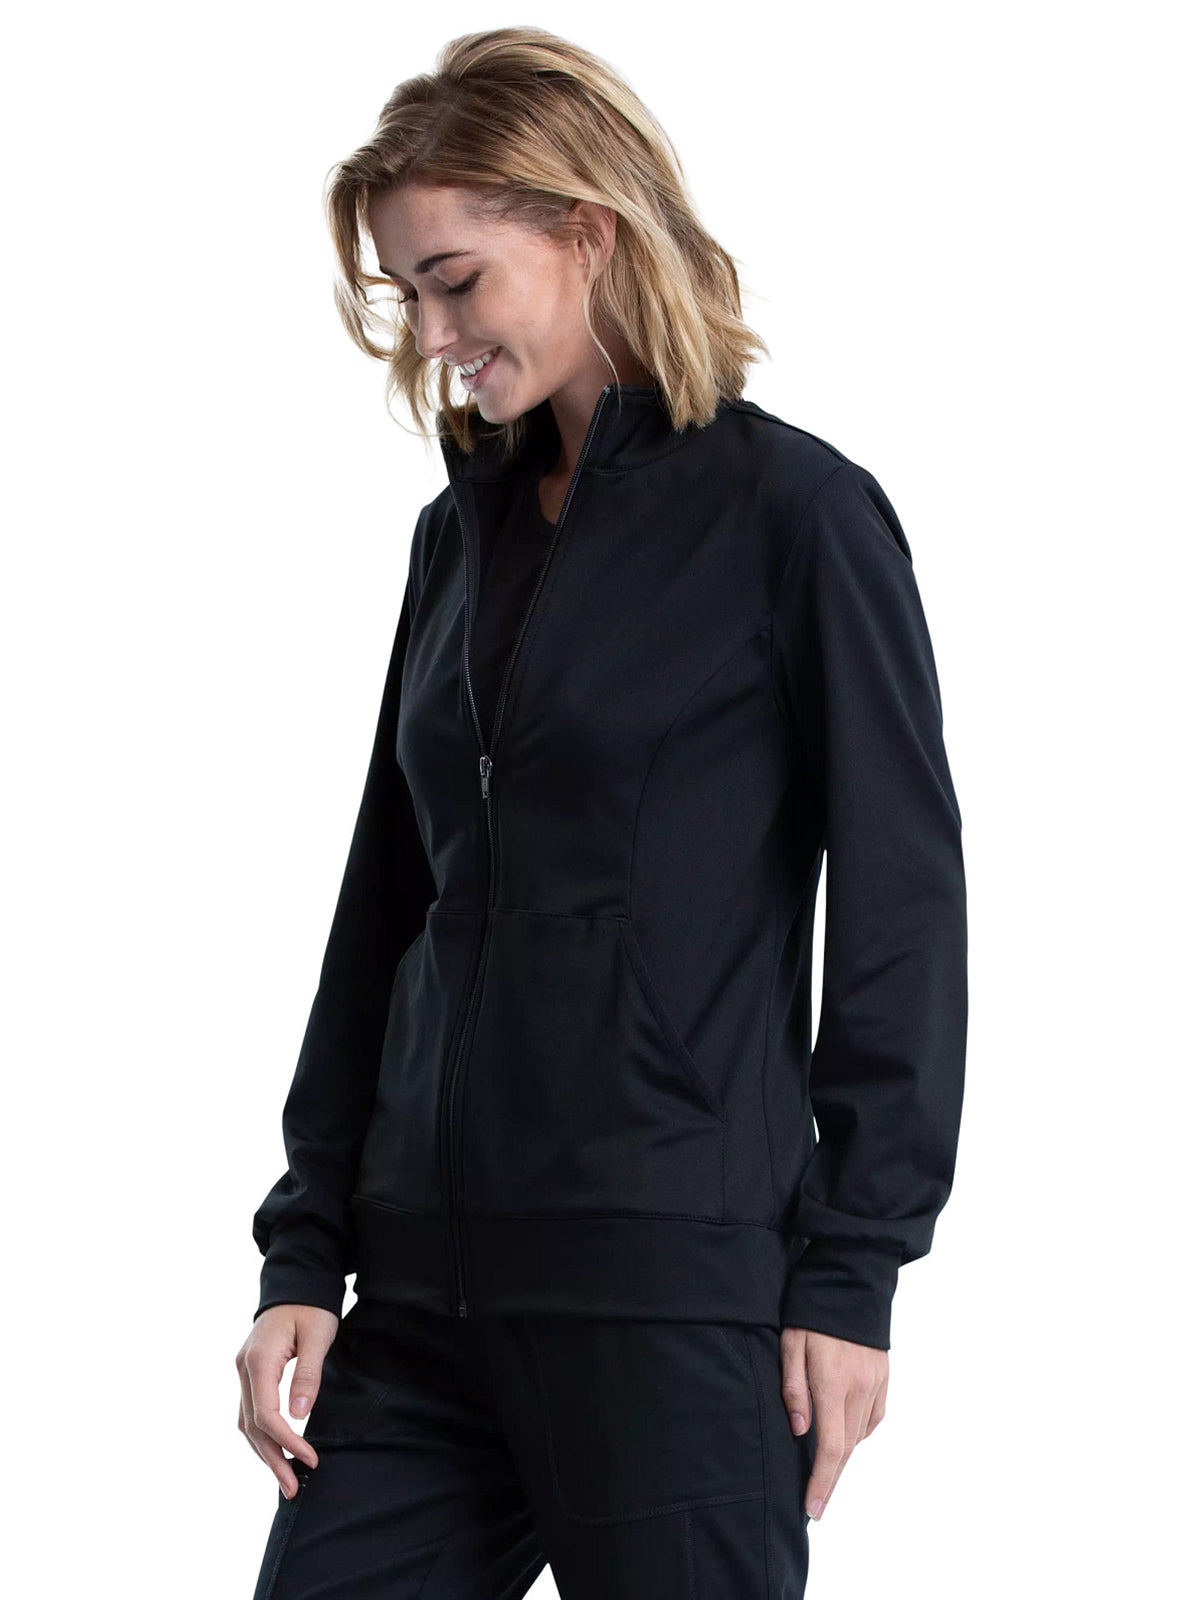 Women's 3-Pocket Zip Front Knit Scrub Jacket